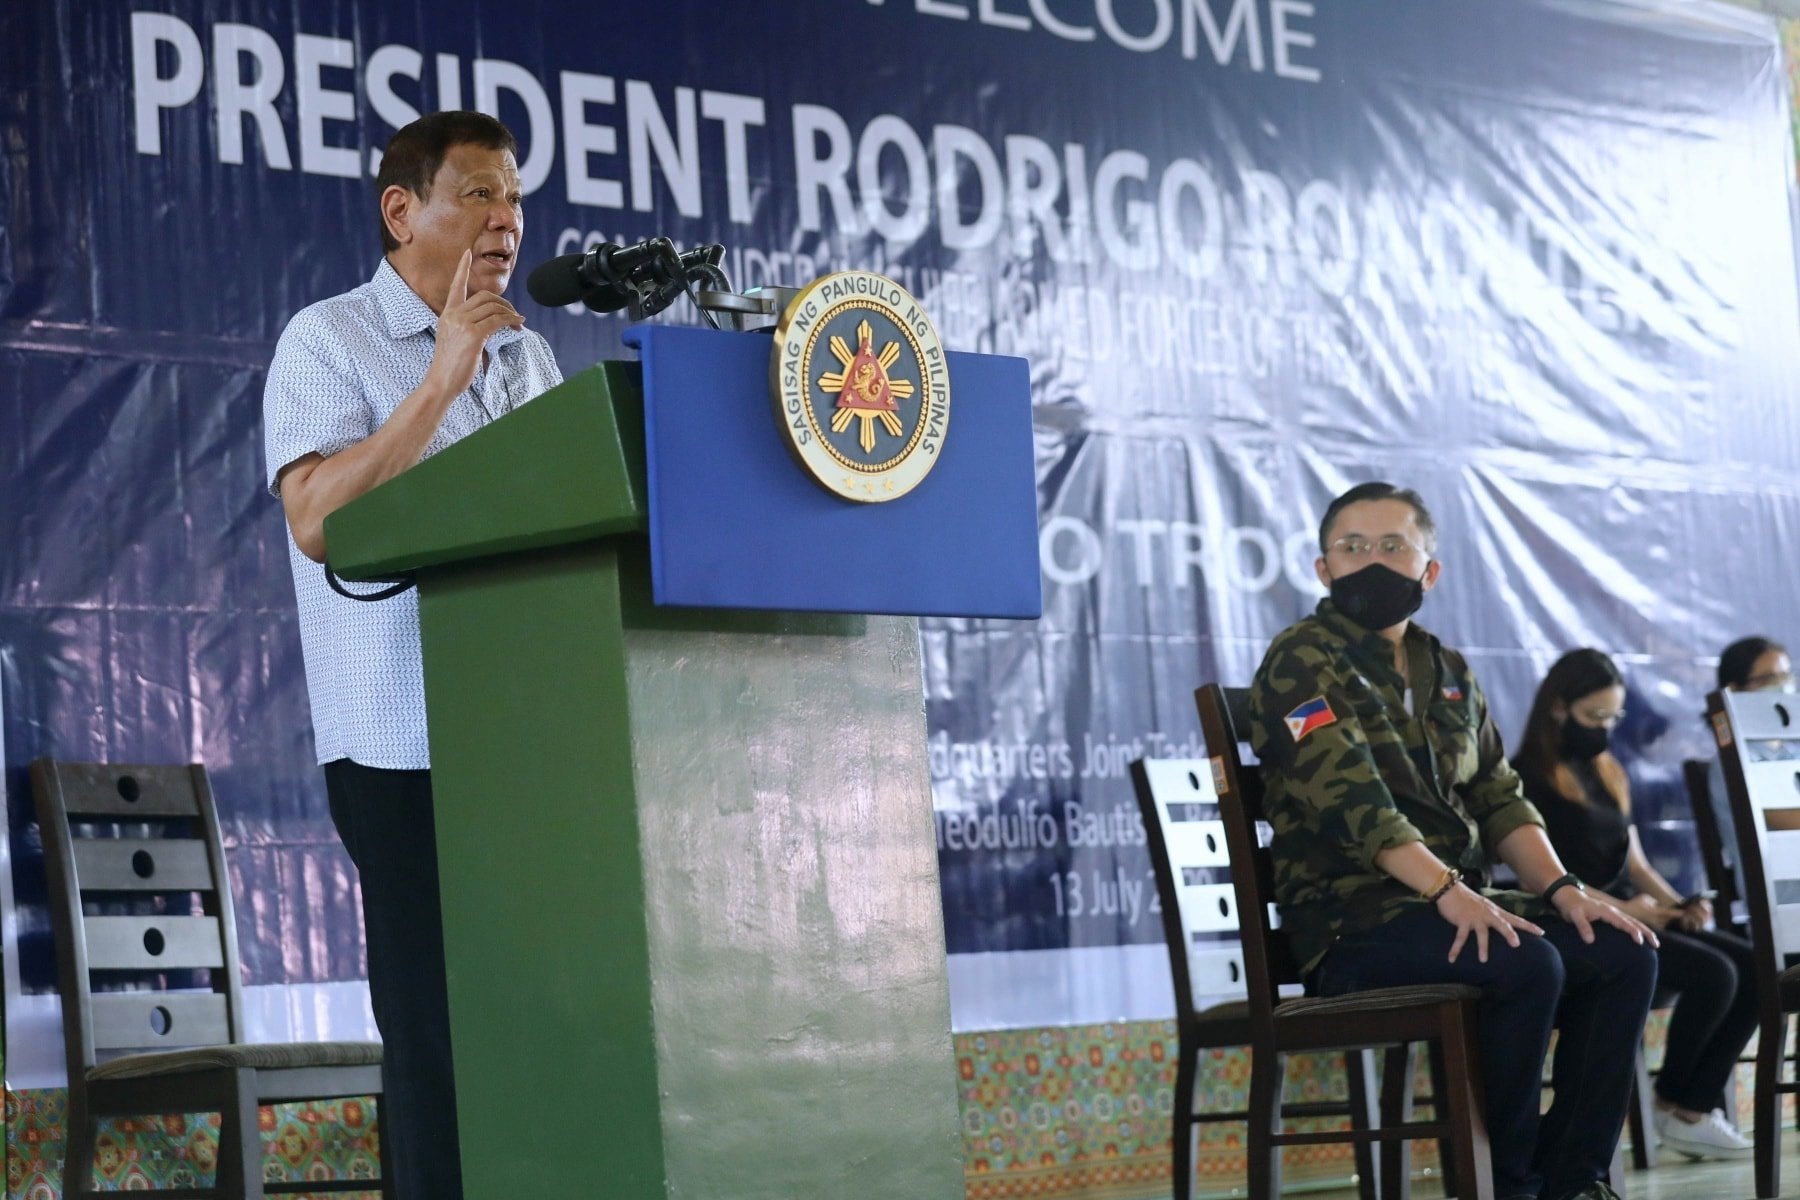 President Rodrigo Duterte at an event in Mindanao earlier this week. Photo: Presidential Communications/FB